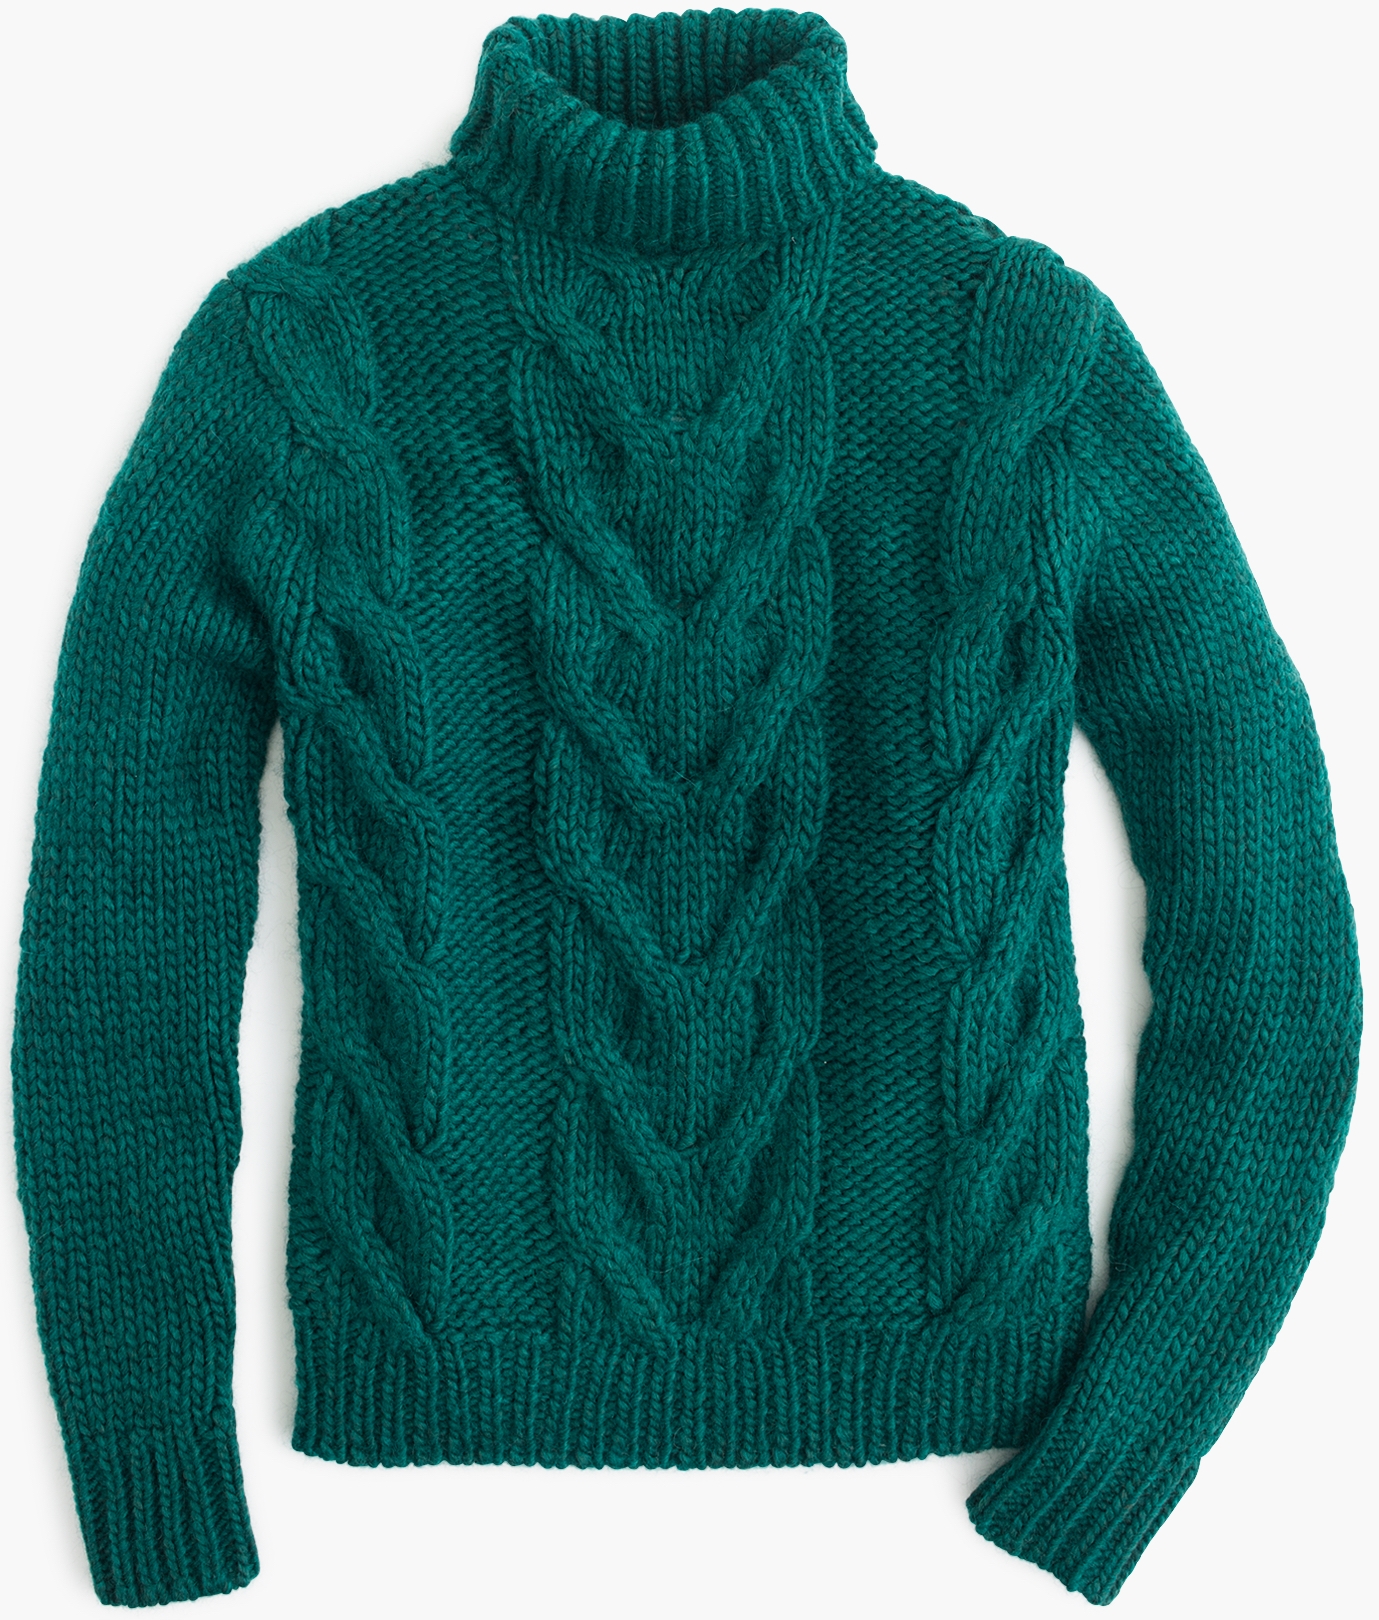 J.Crew Italian Wool Cable Turtleneck Sweater, $168